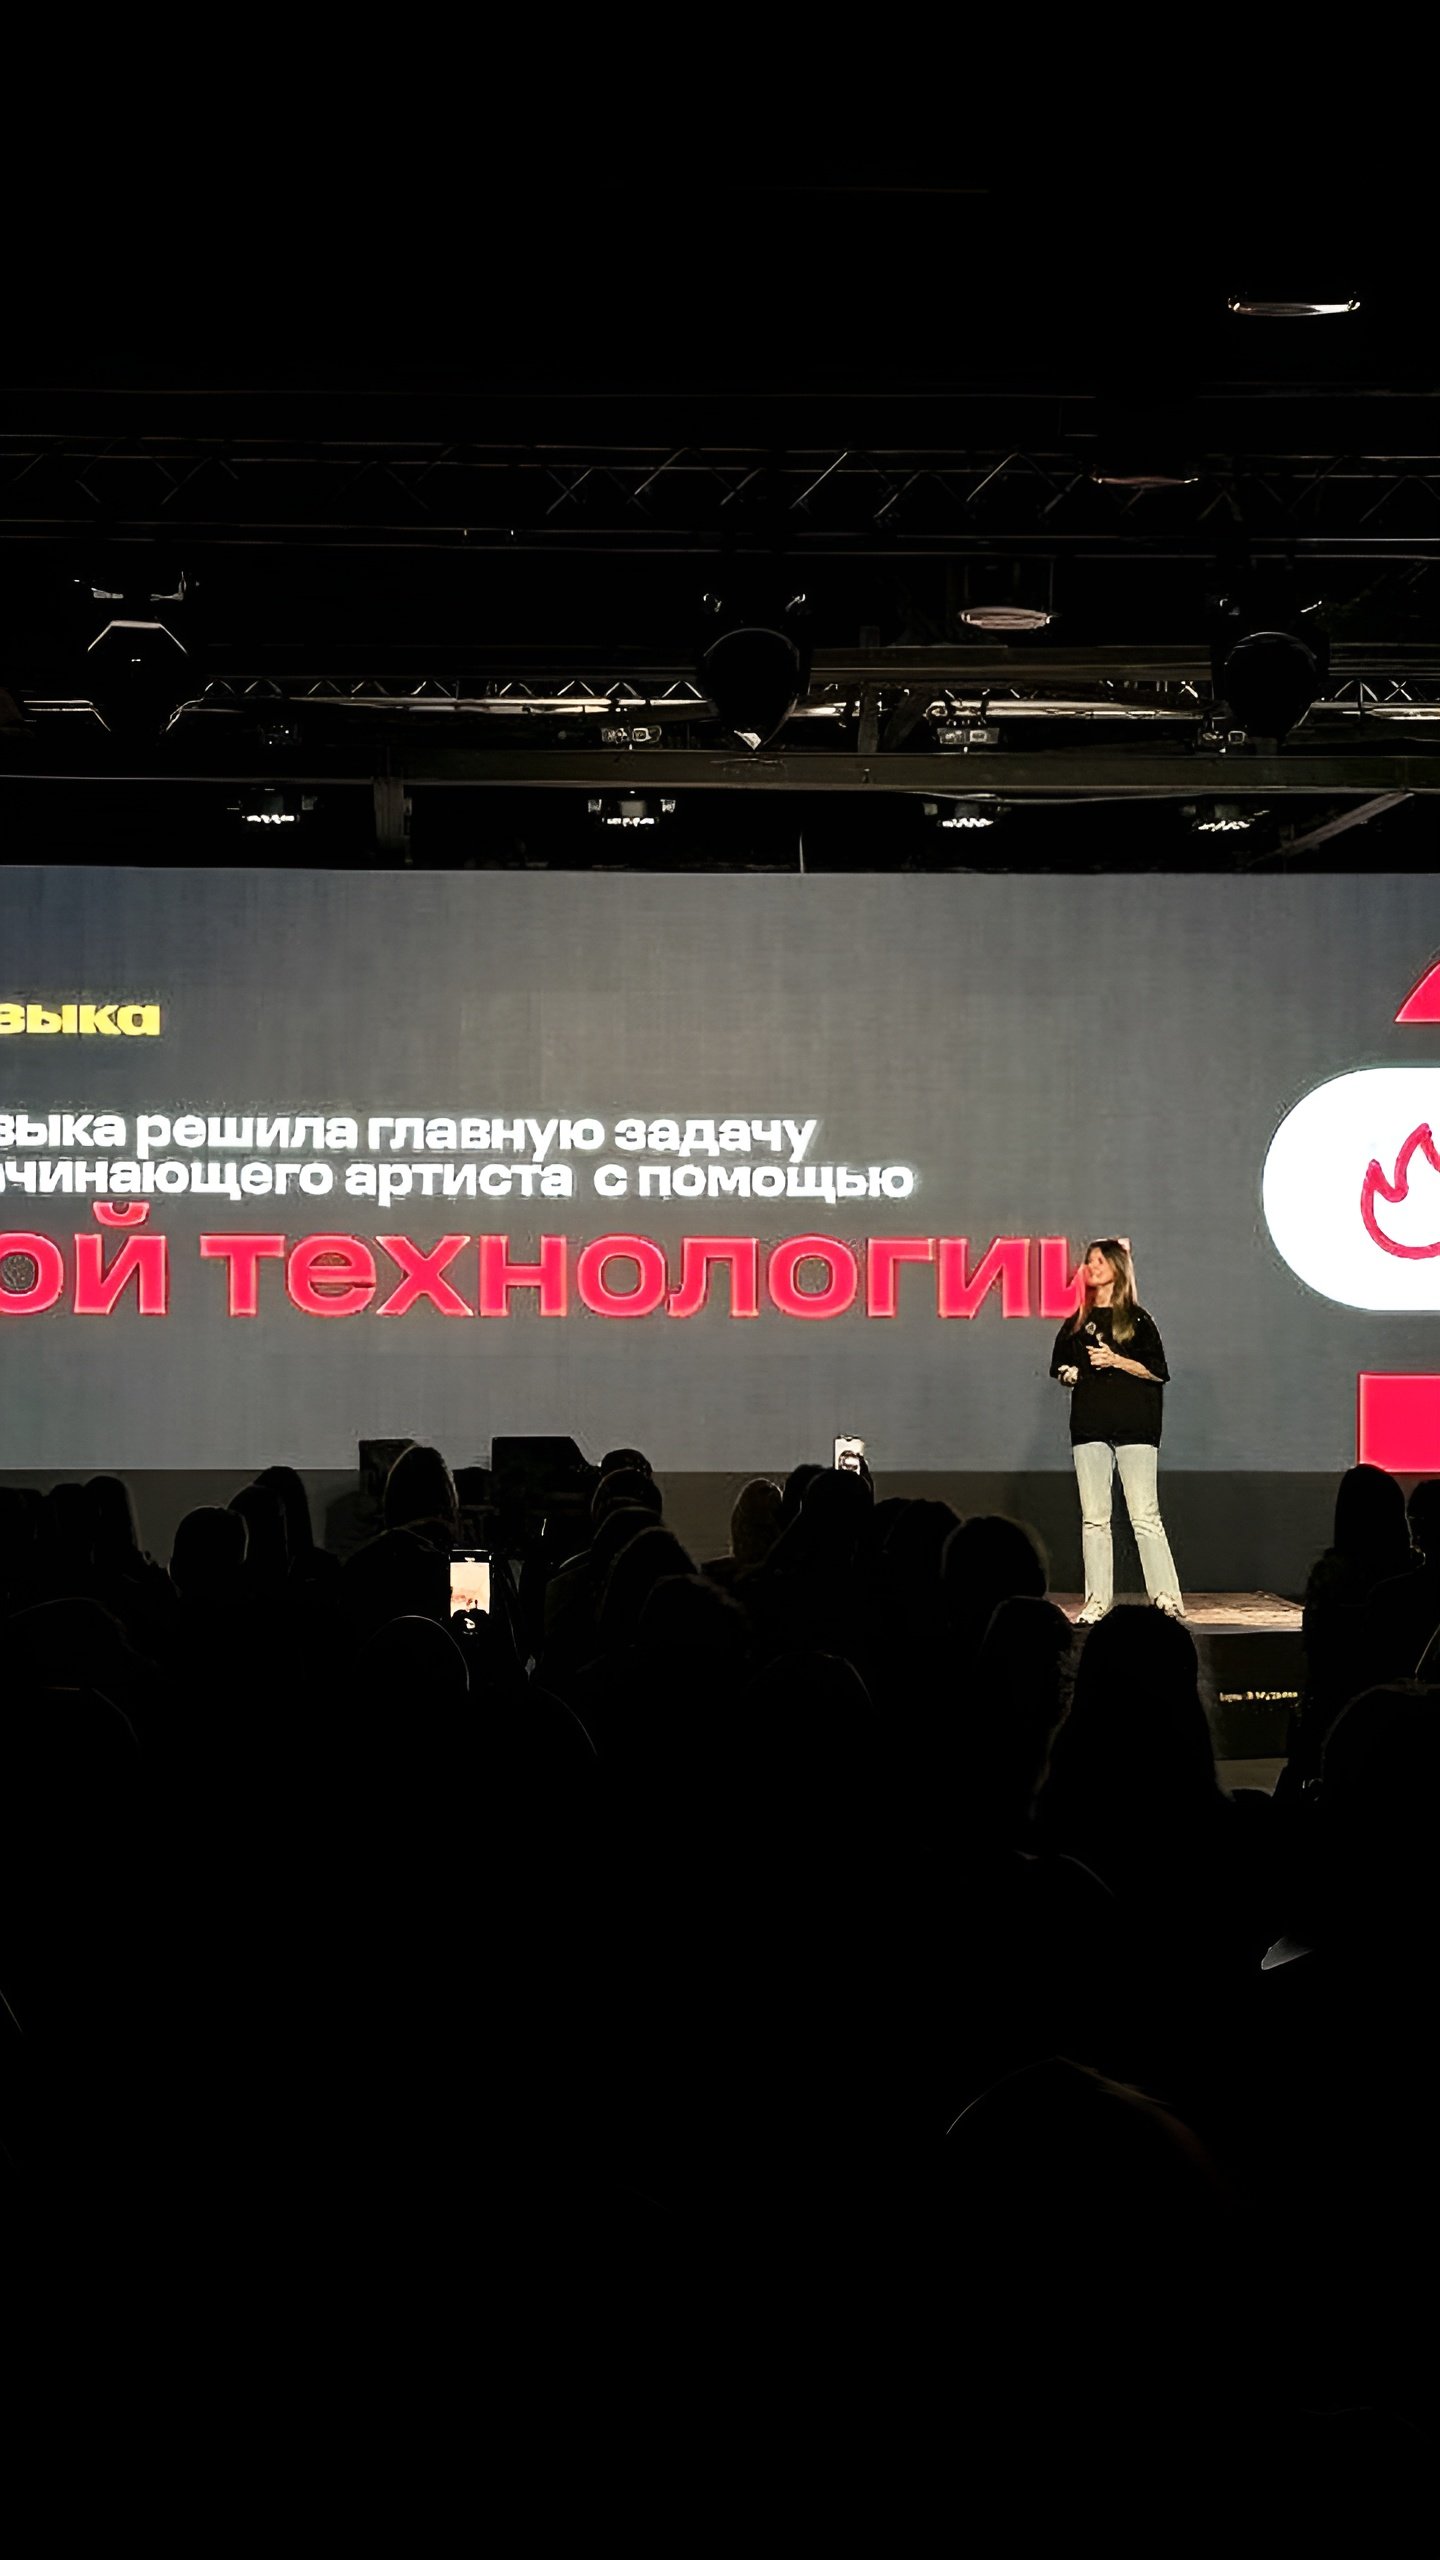 «Яндекс Музыка» запустила технологию «Нитро» для начинающих артистов